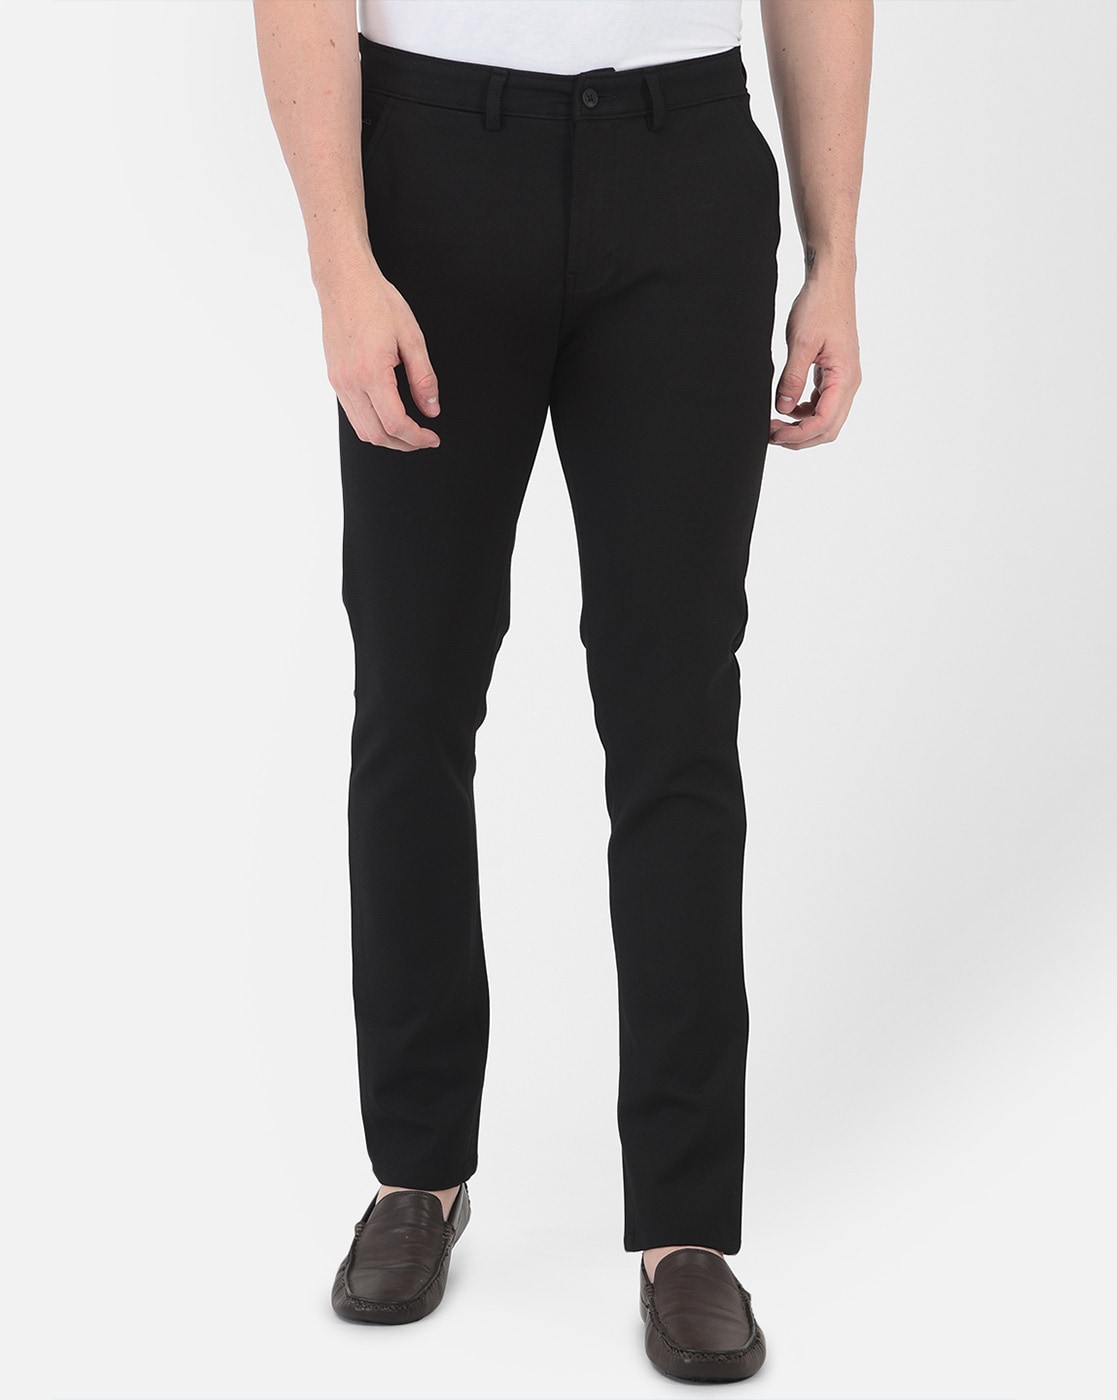 Buy Black Trousers  Pants for Men by Crimsoune club Online  Ajiocom